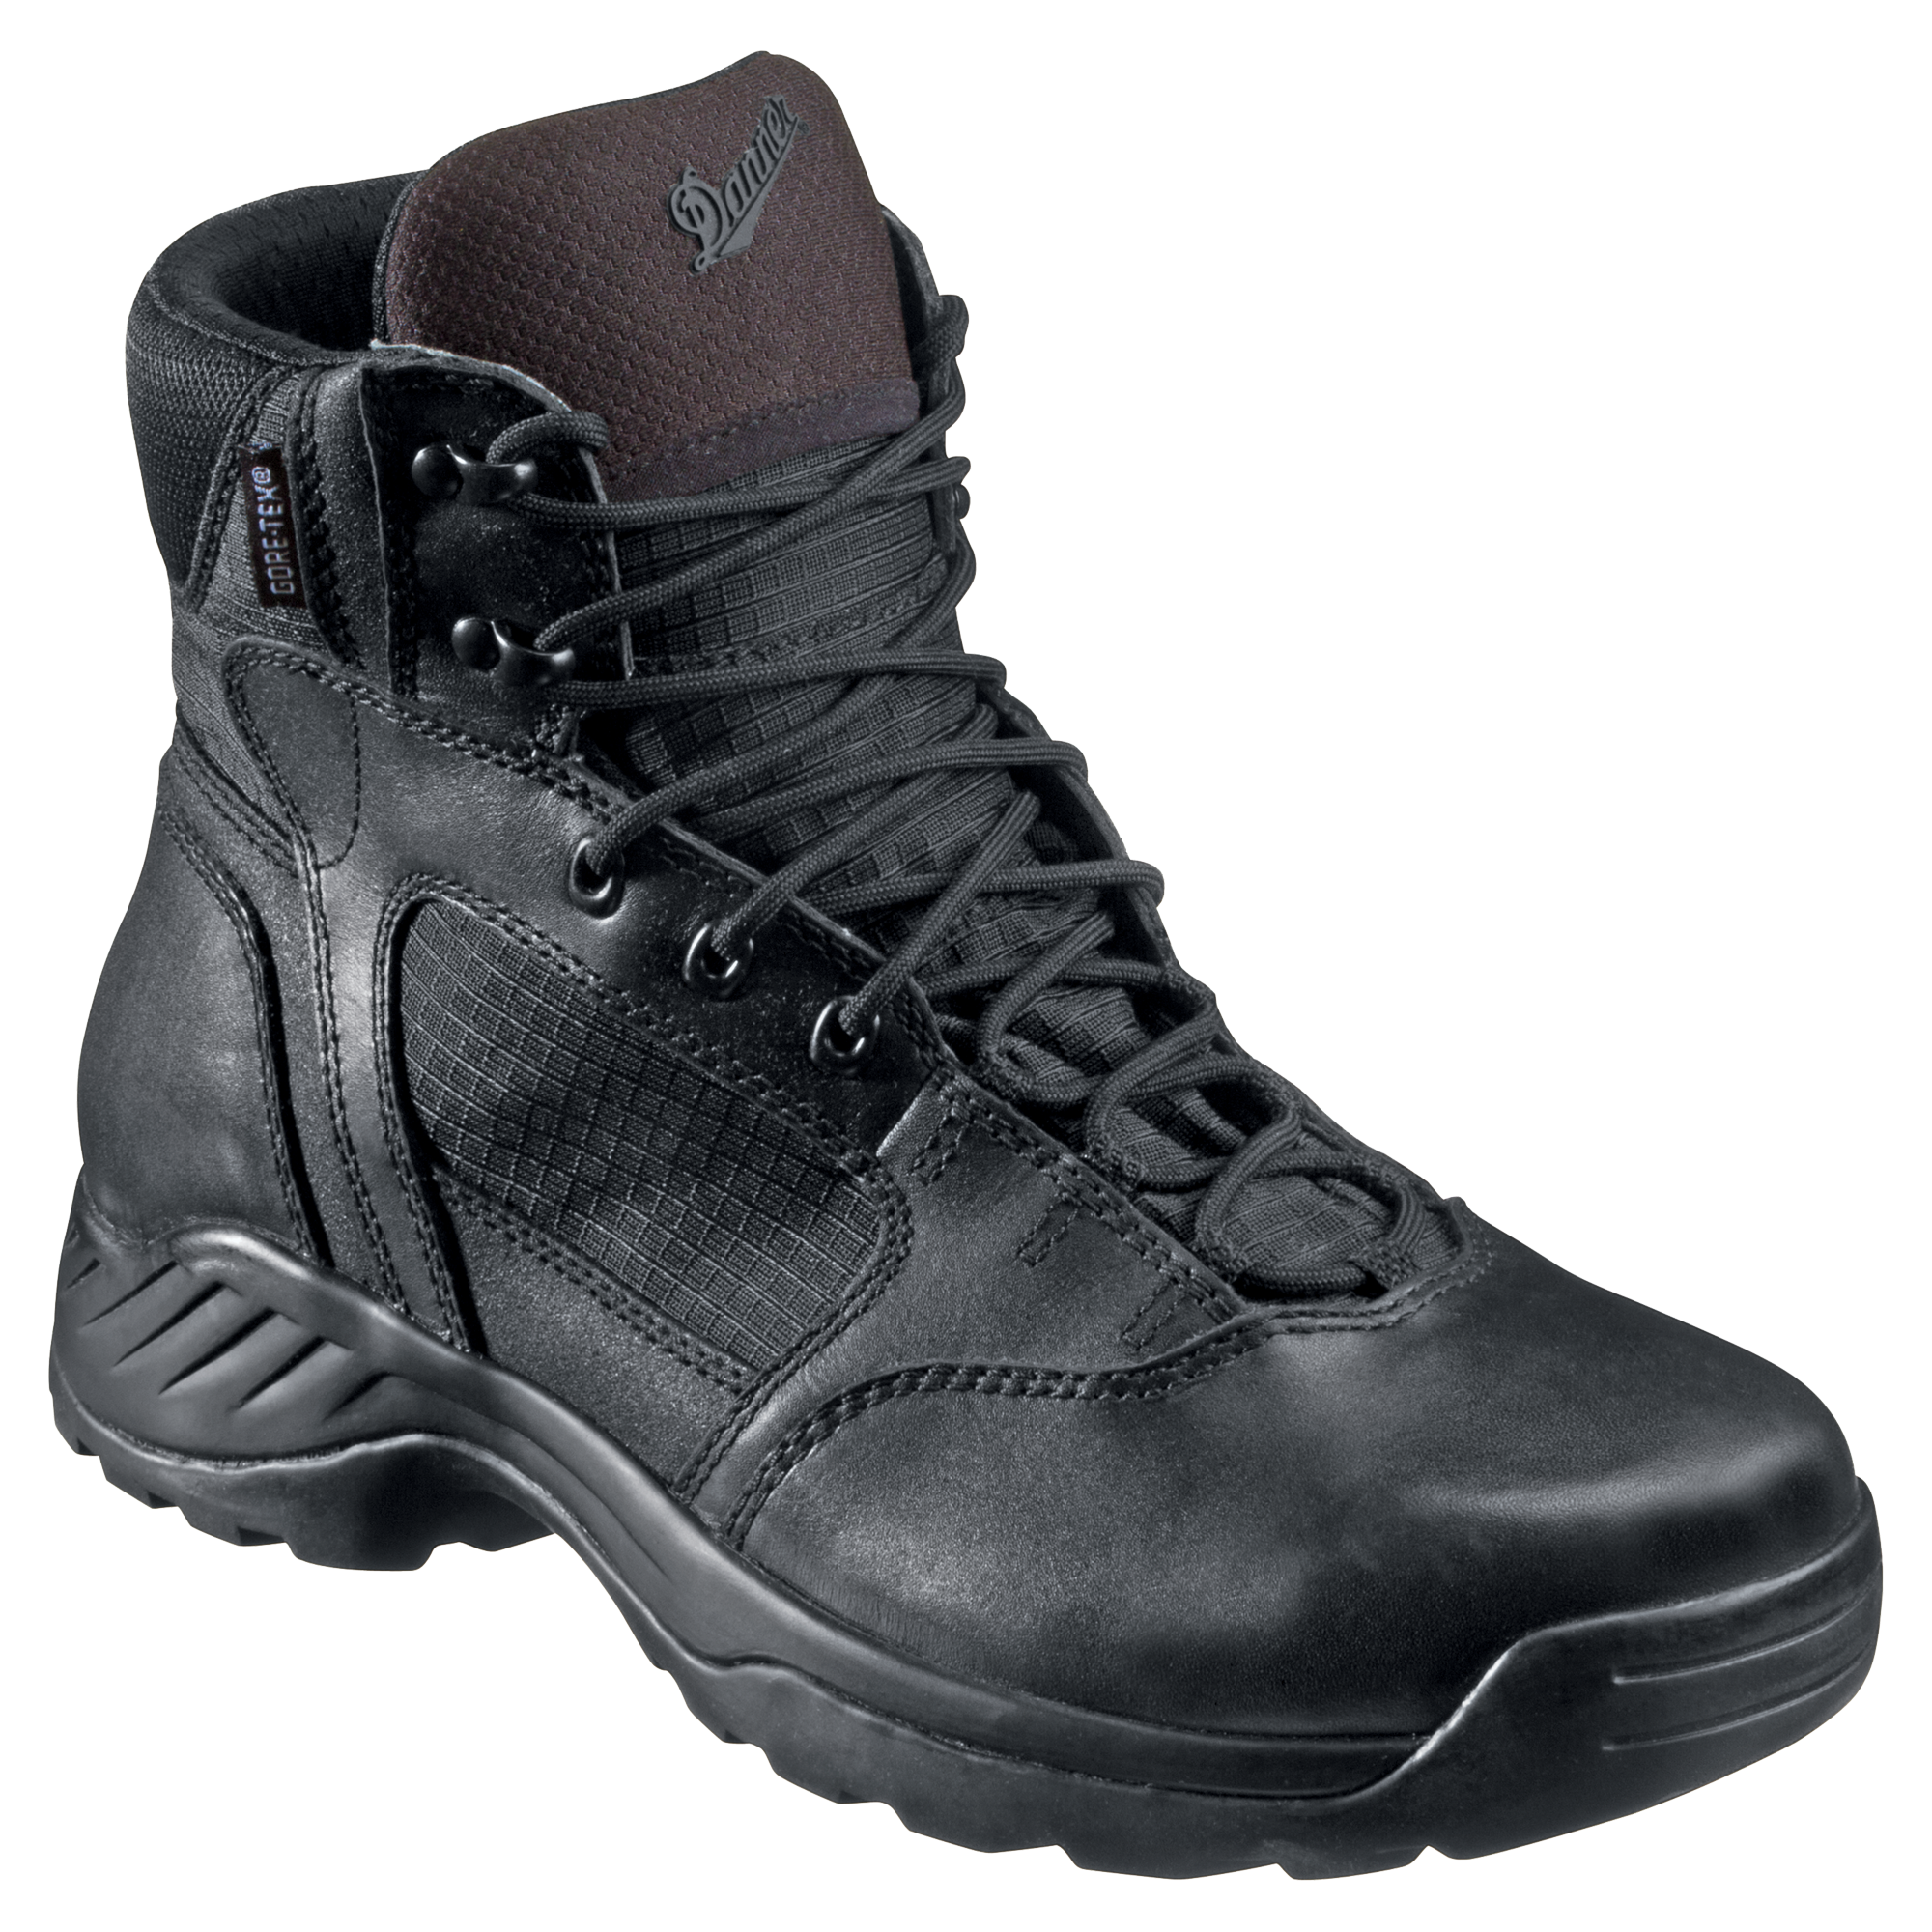 Danner Kinetic GTX 6' Side-Zip Waterproof Tactical Duty Boots for Men - Black - 6.5W